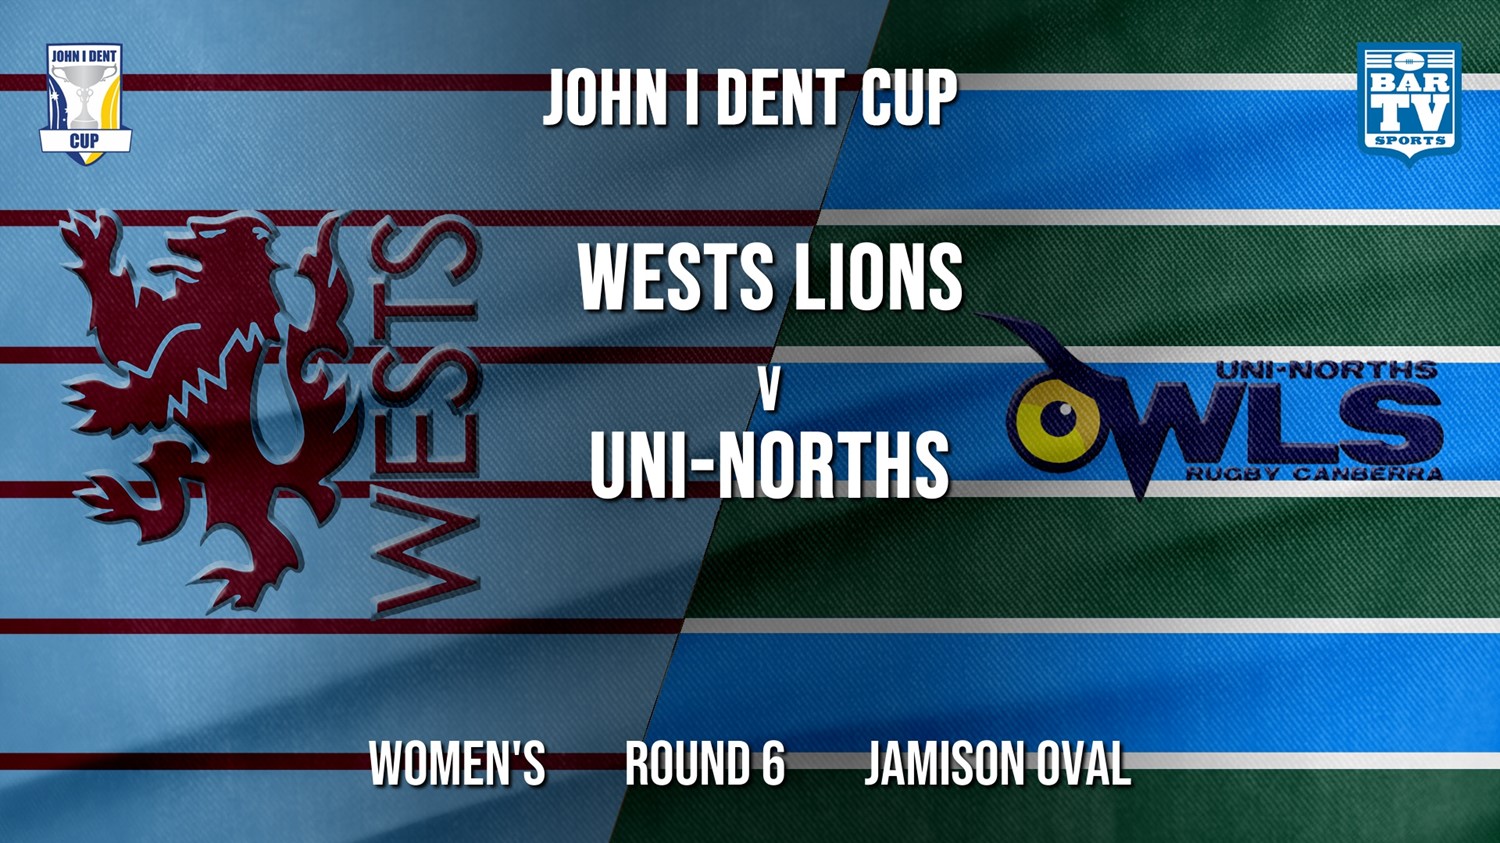 John I Dent Round 6 - Women's - Wests Lions v UNI-Norths Minigame Slate Image